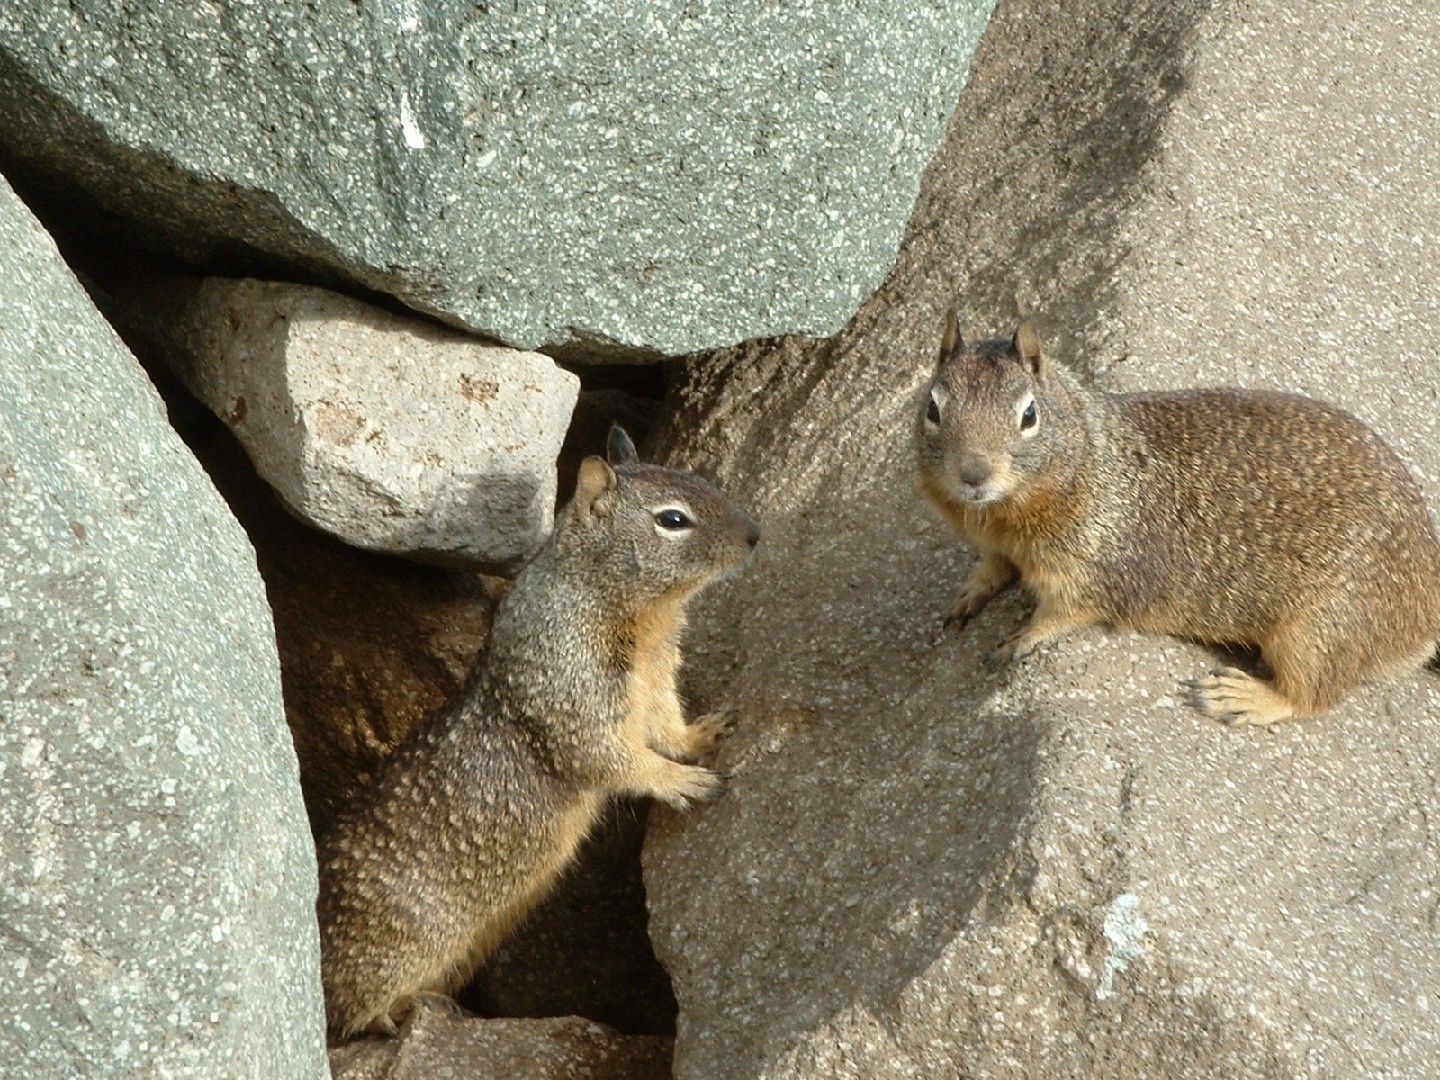 North american rock squirrels (Otospermophilus)